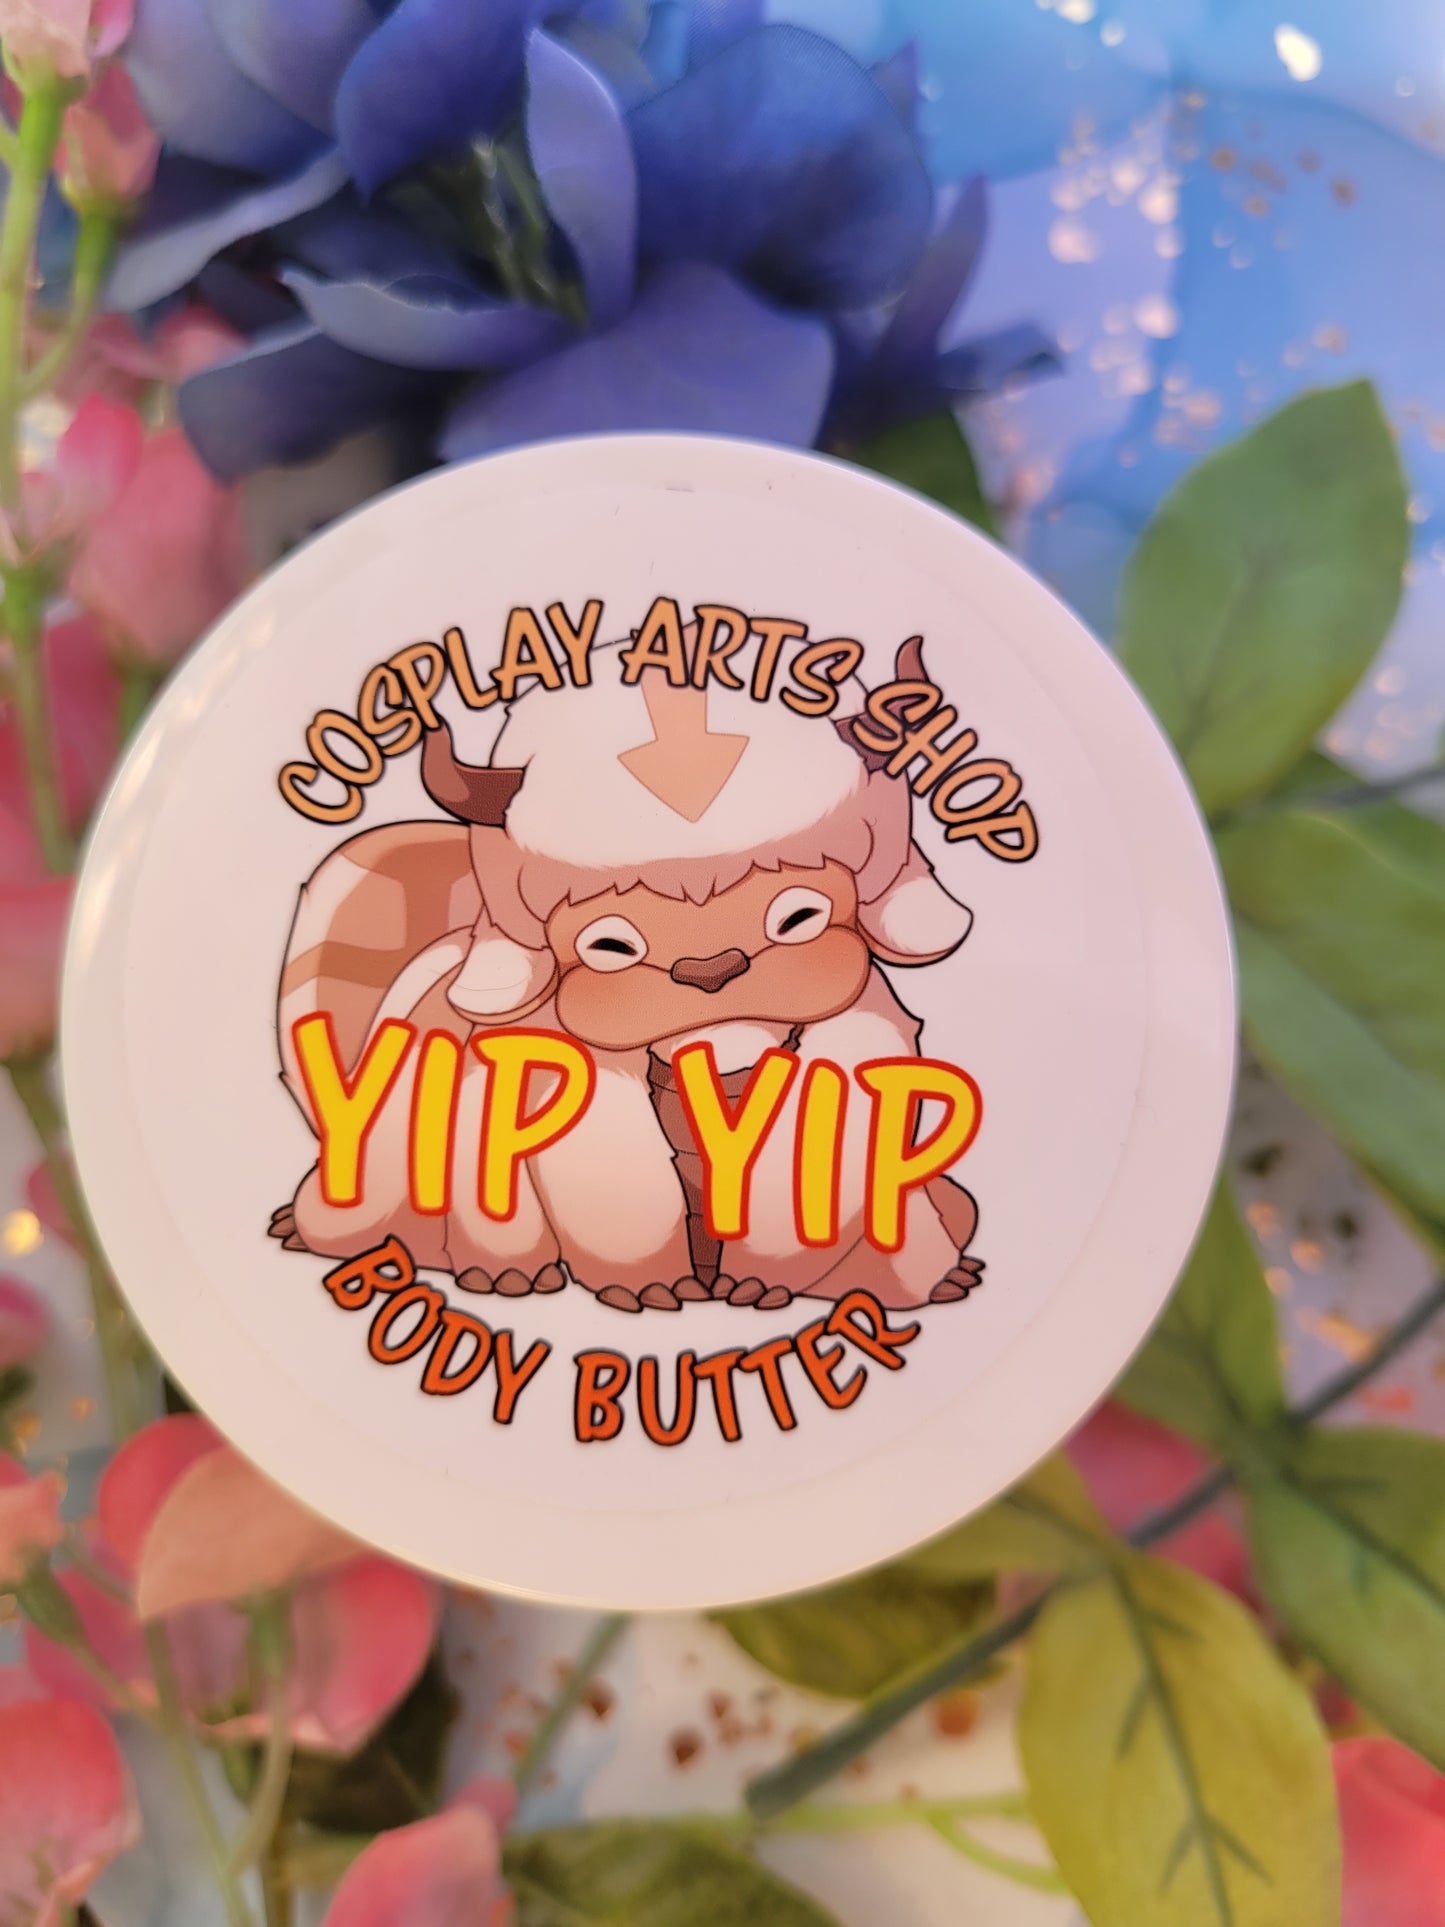 Yip Yip Body Butter - Cosplay Arts Shop